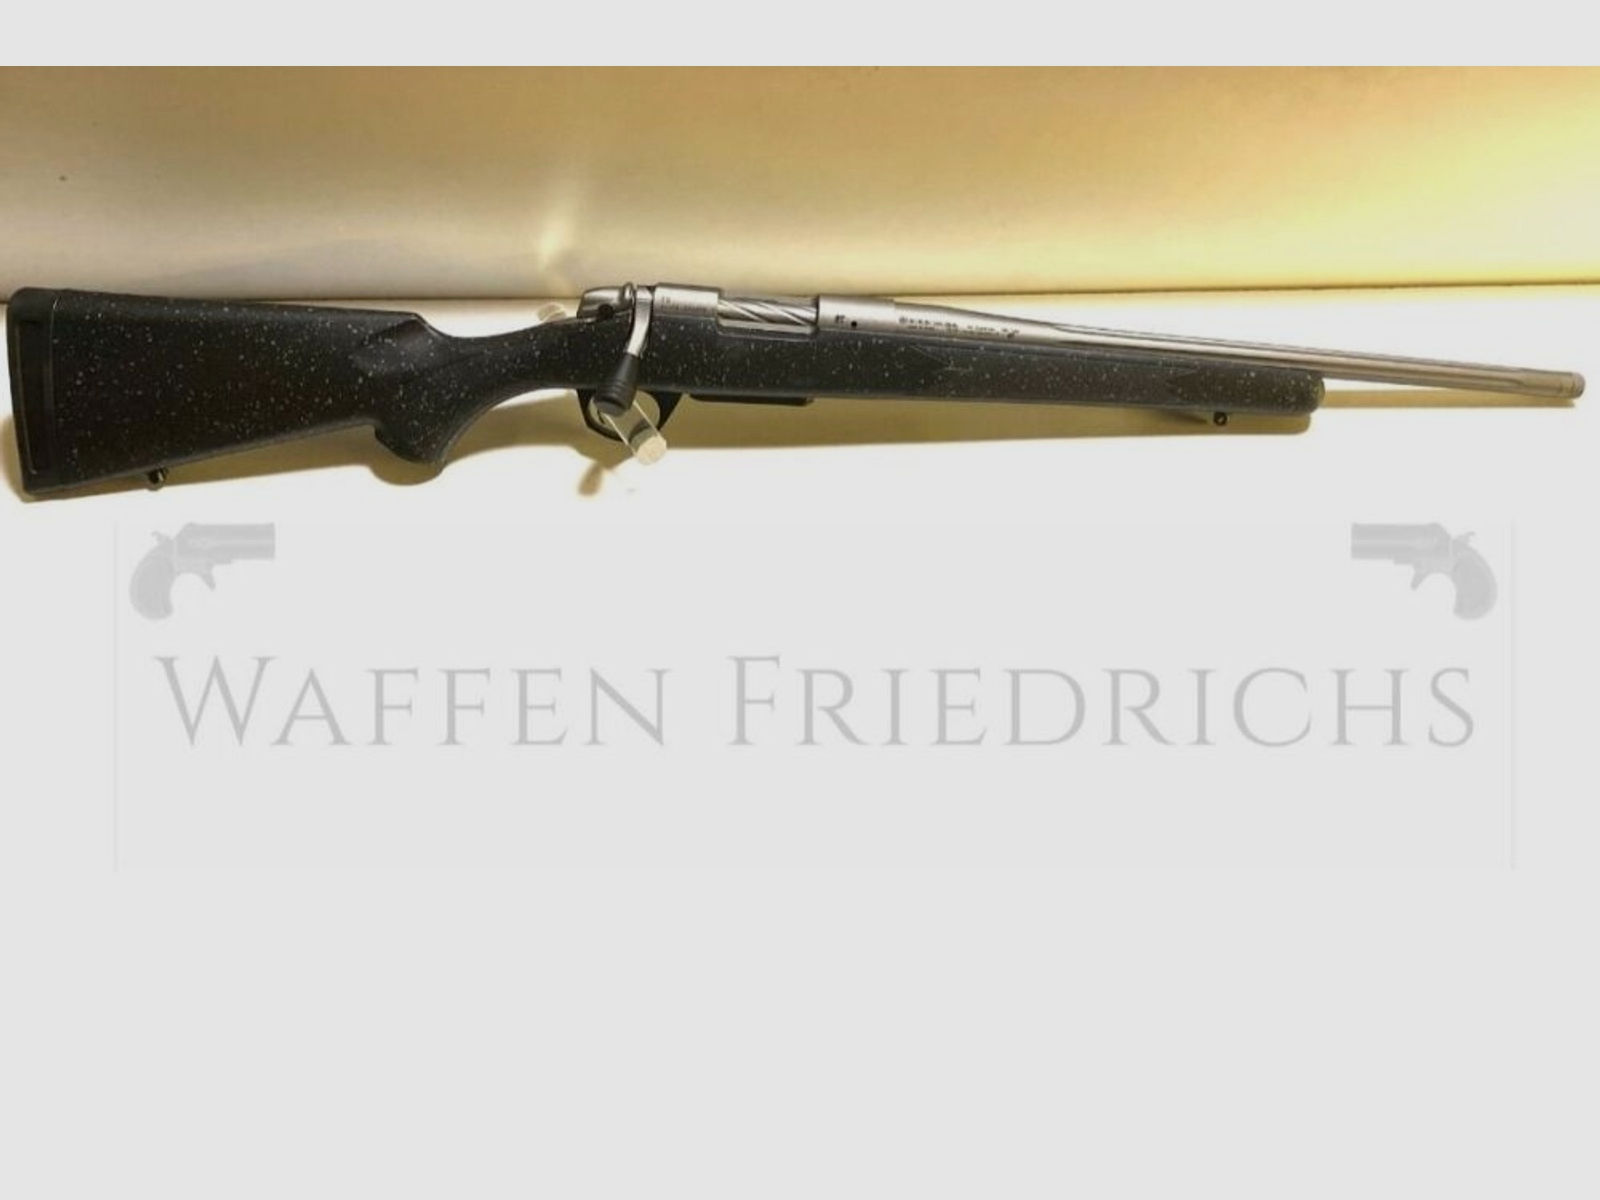 BERGARA	 B14 EXTREME HUNTER - Waffen Friedrichs